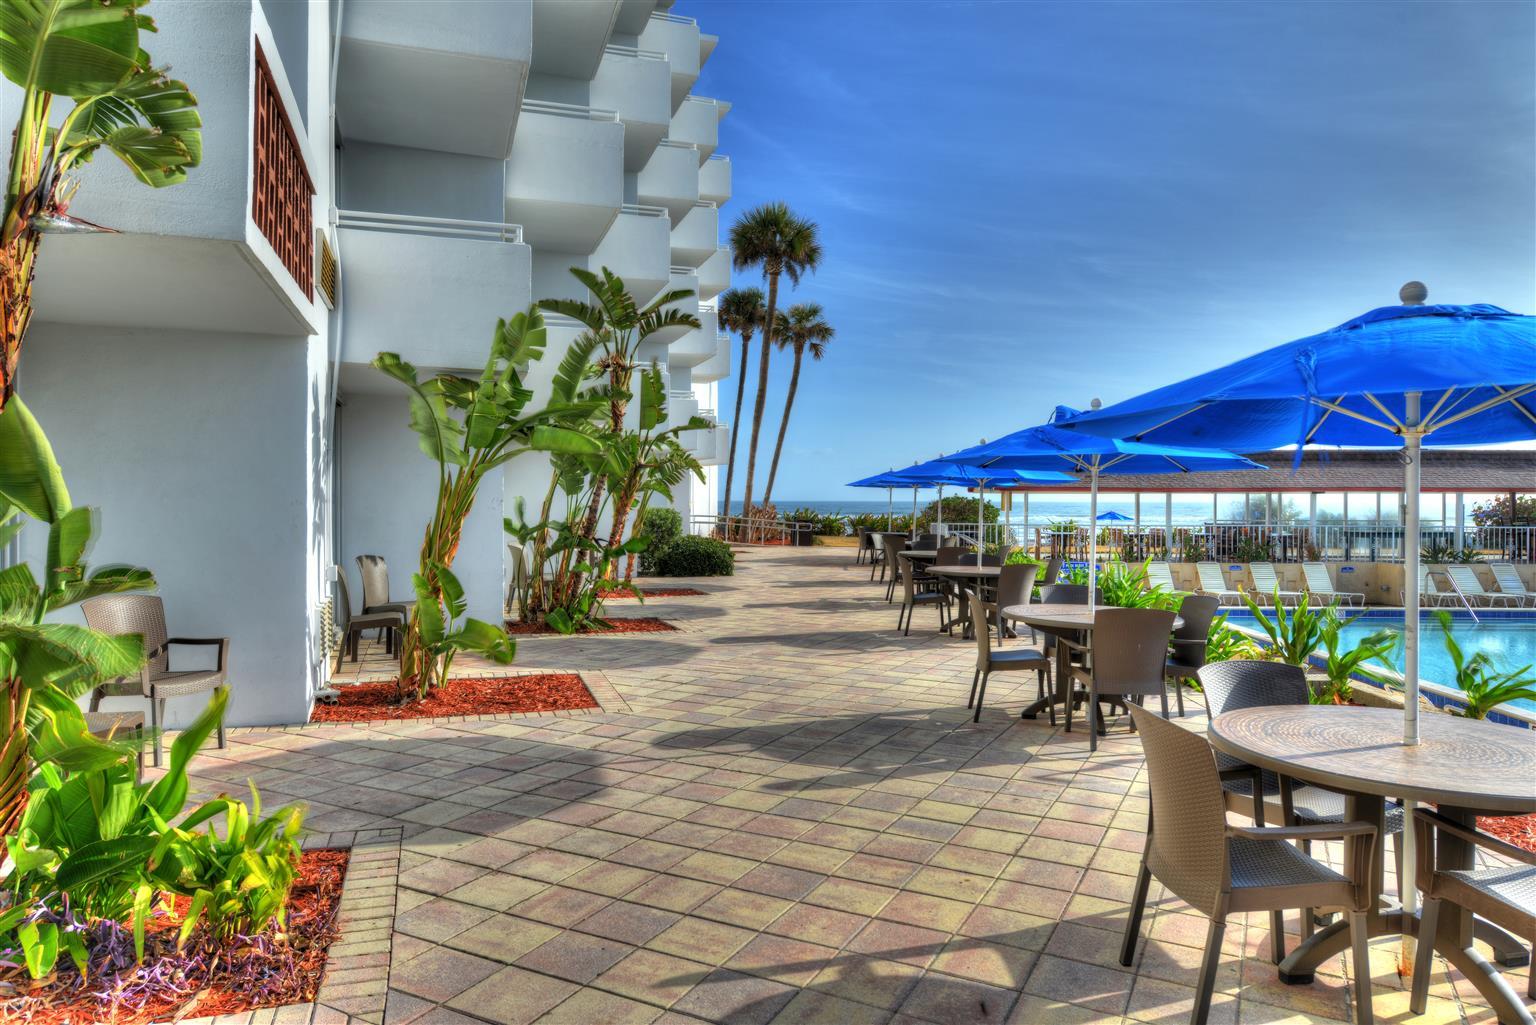 Best Western Aku Tiki Inn Daytona Beach Exterior photo